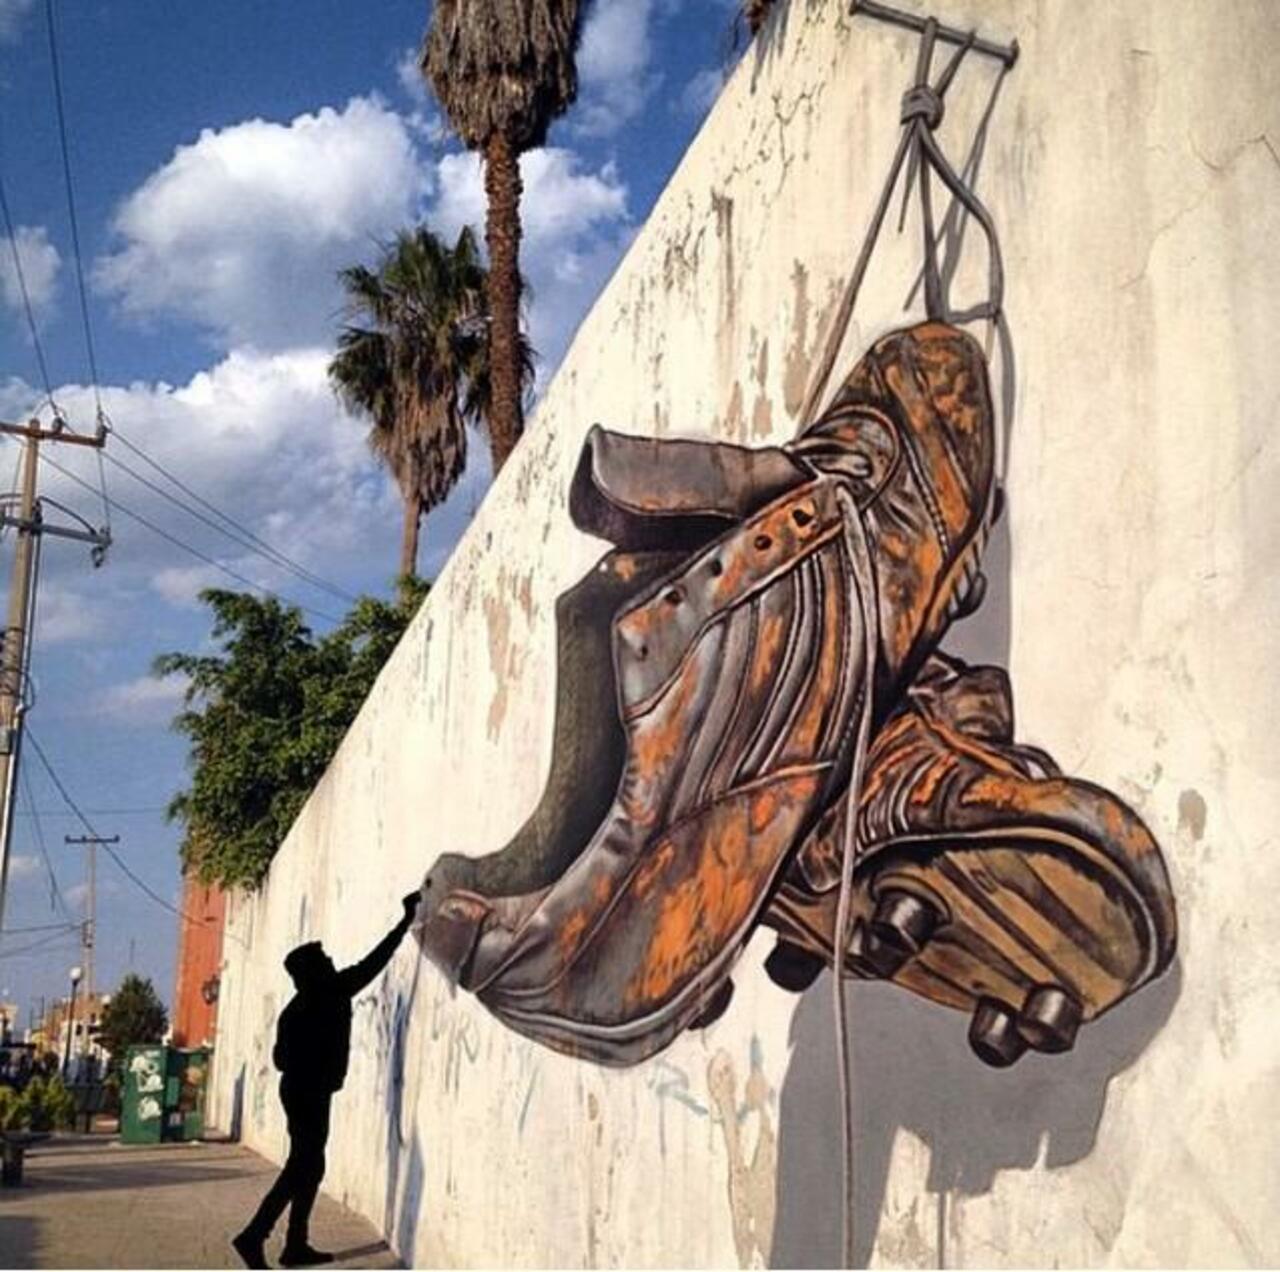 “@GoogleStreetArt: Awesome anamorphic 3D Street Art by Juandres Vera 

#art #graffiti #mural #streetart http://t.co/nK66H7T4gh”#2COOL